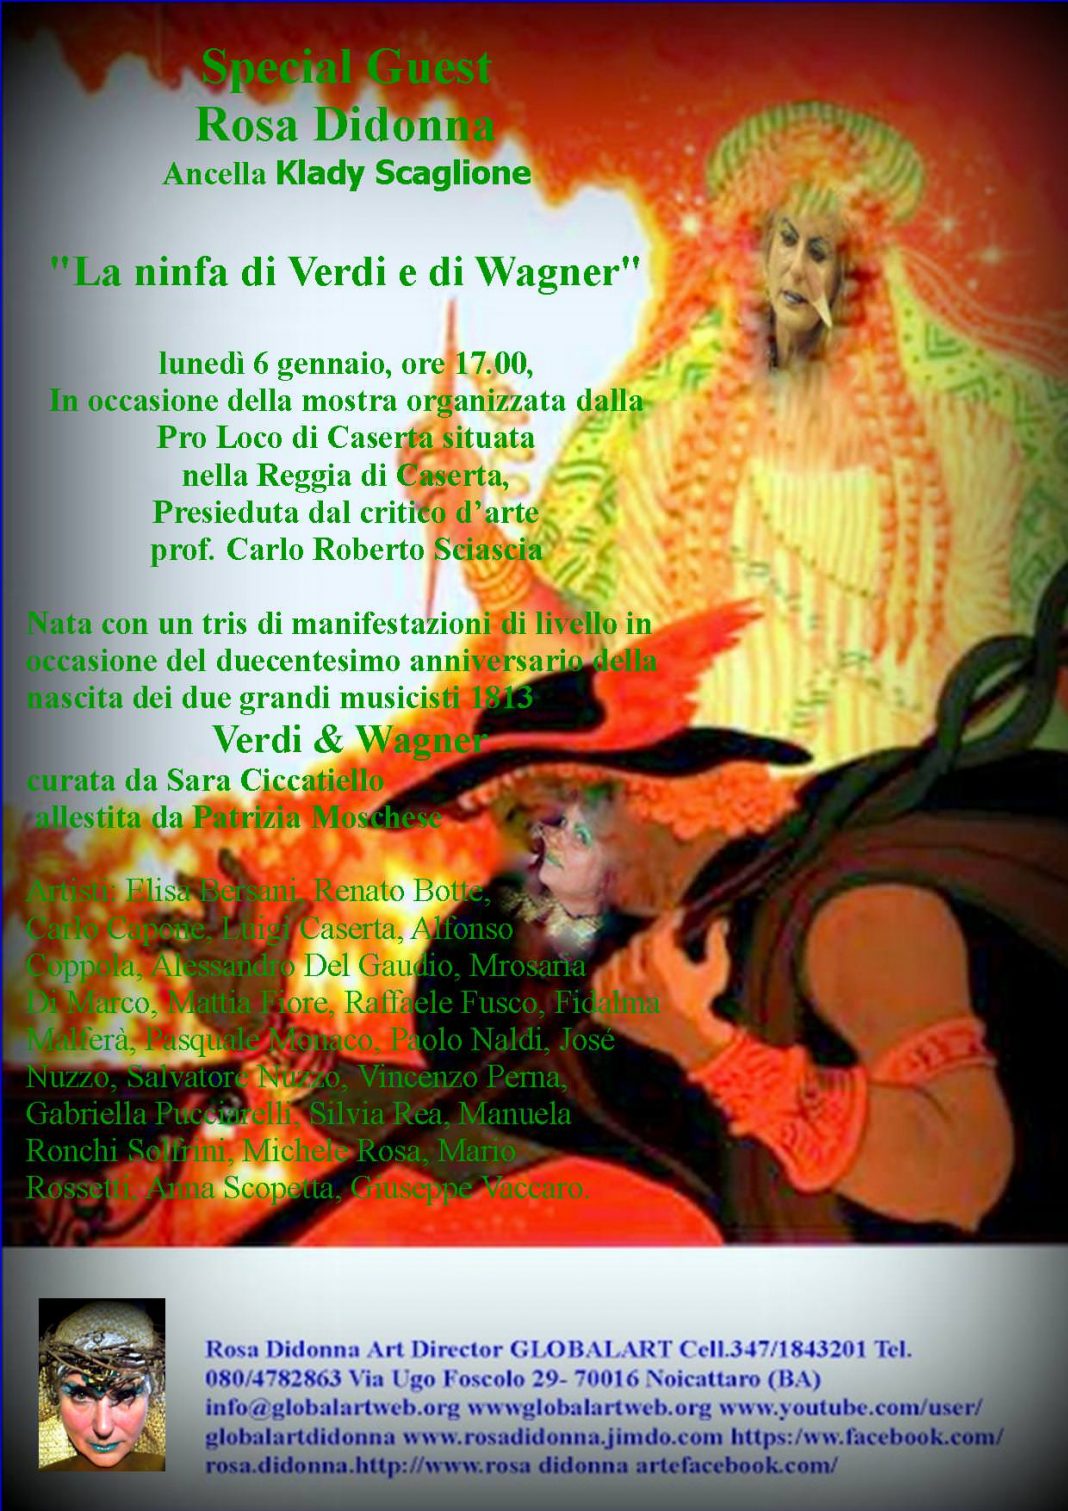 La ninfa di Verdi e di Wagnerhttps://www.exibart.com/repository/media/eventi/2013/12/la-ninfa-di-verdi-e-di-wagner-1068x1511.jpg